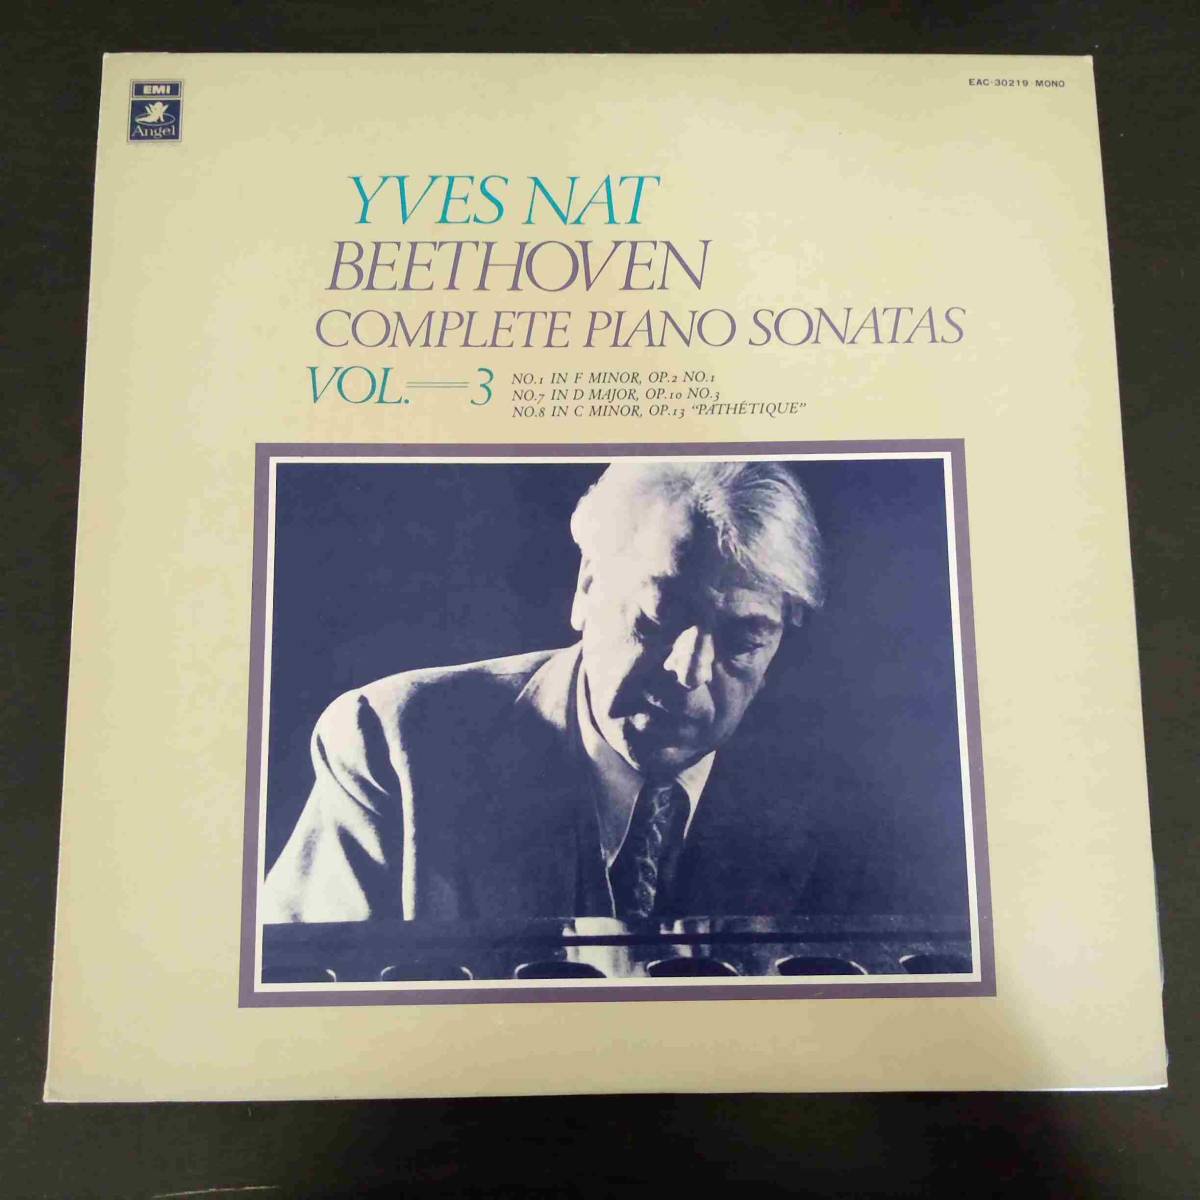 LP/EMI　ベートーヴェン　ピアノ・ソナタ全集Vol.3　第1番、第7番、第8番　イーヴ・ナット（ピアノ）　236s_画像1